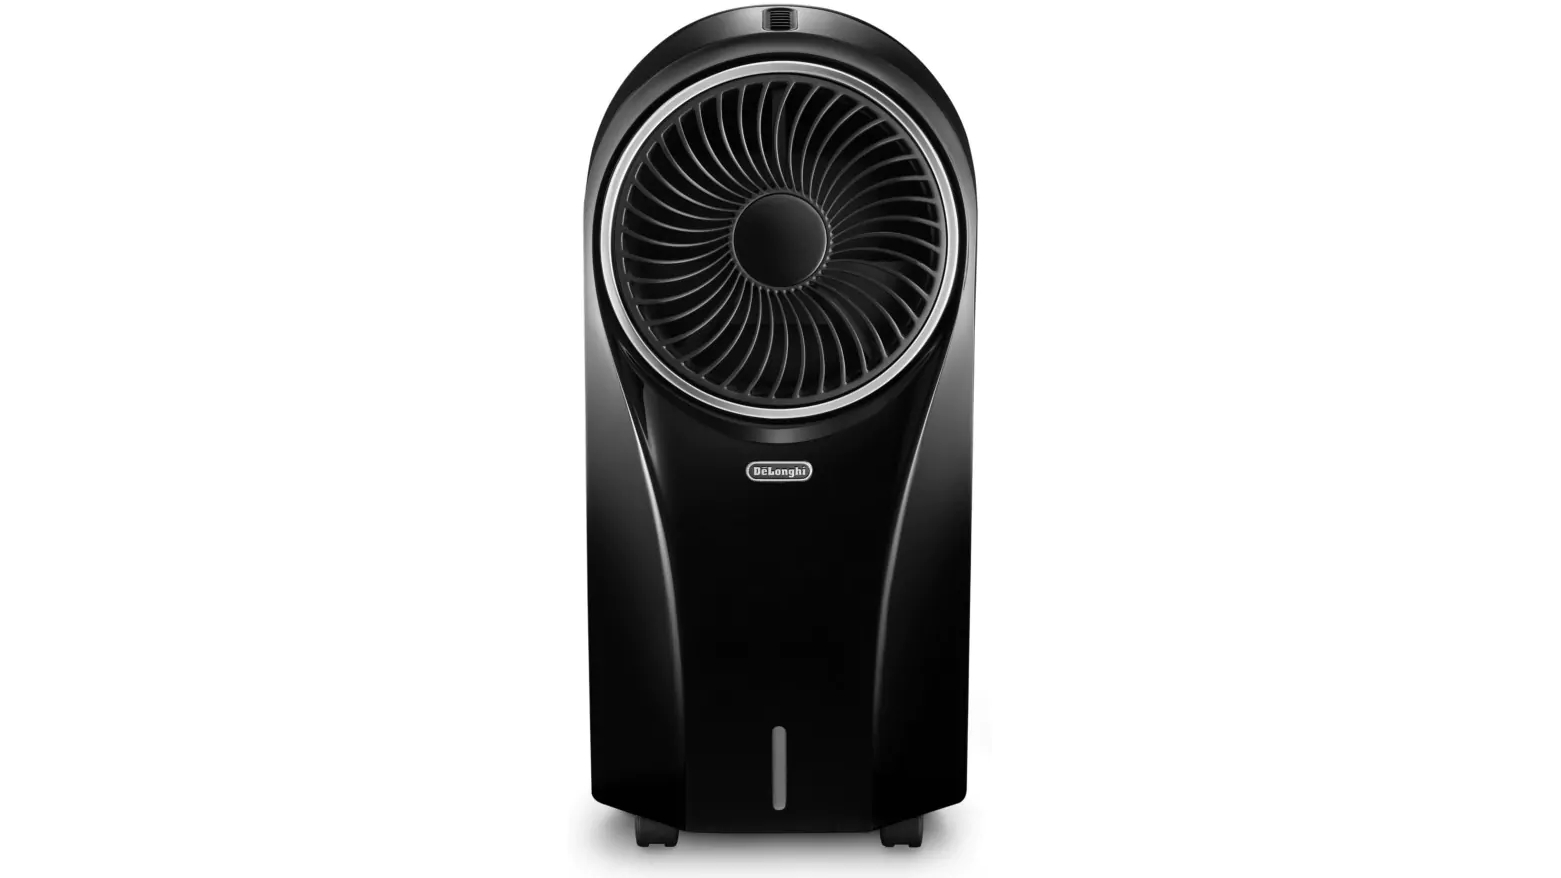 delonghi evaporative cooling fan